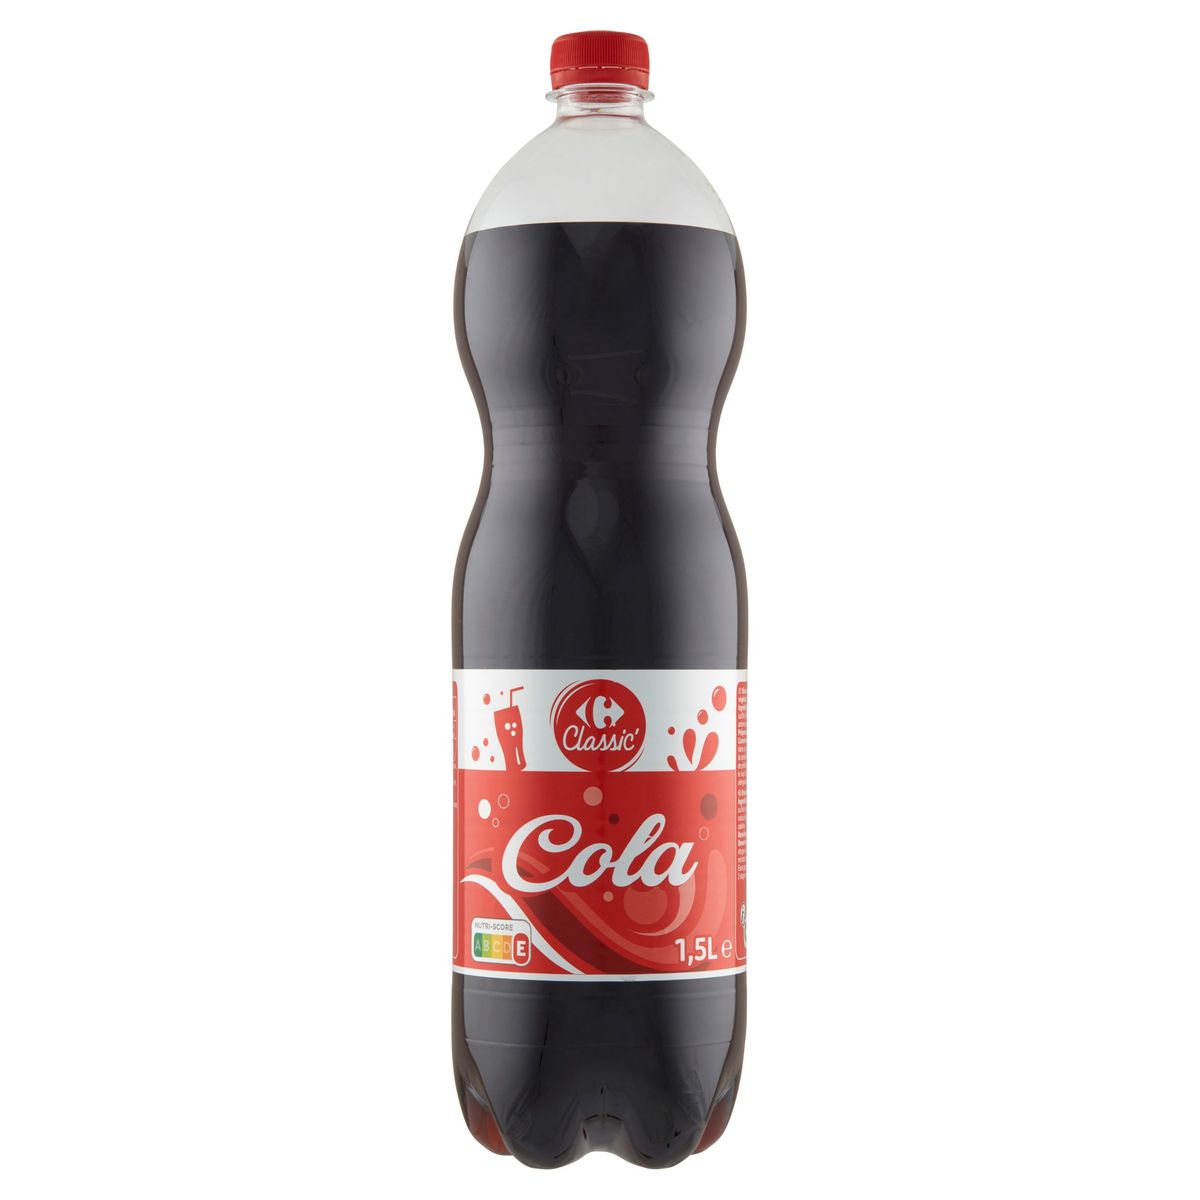 Carrefour Classic' Cola 1.5 L